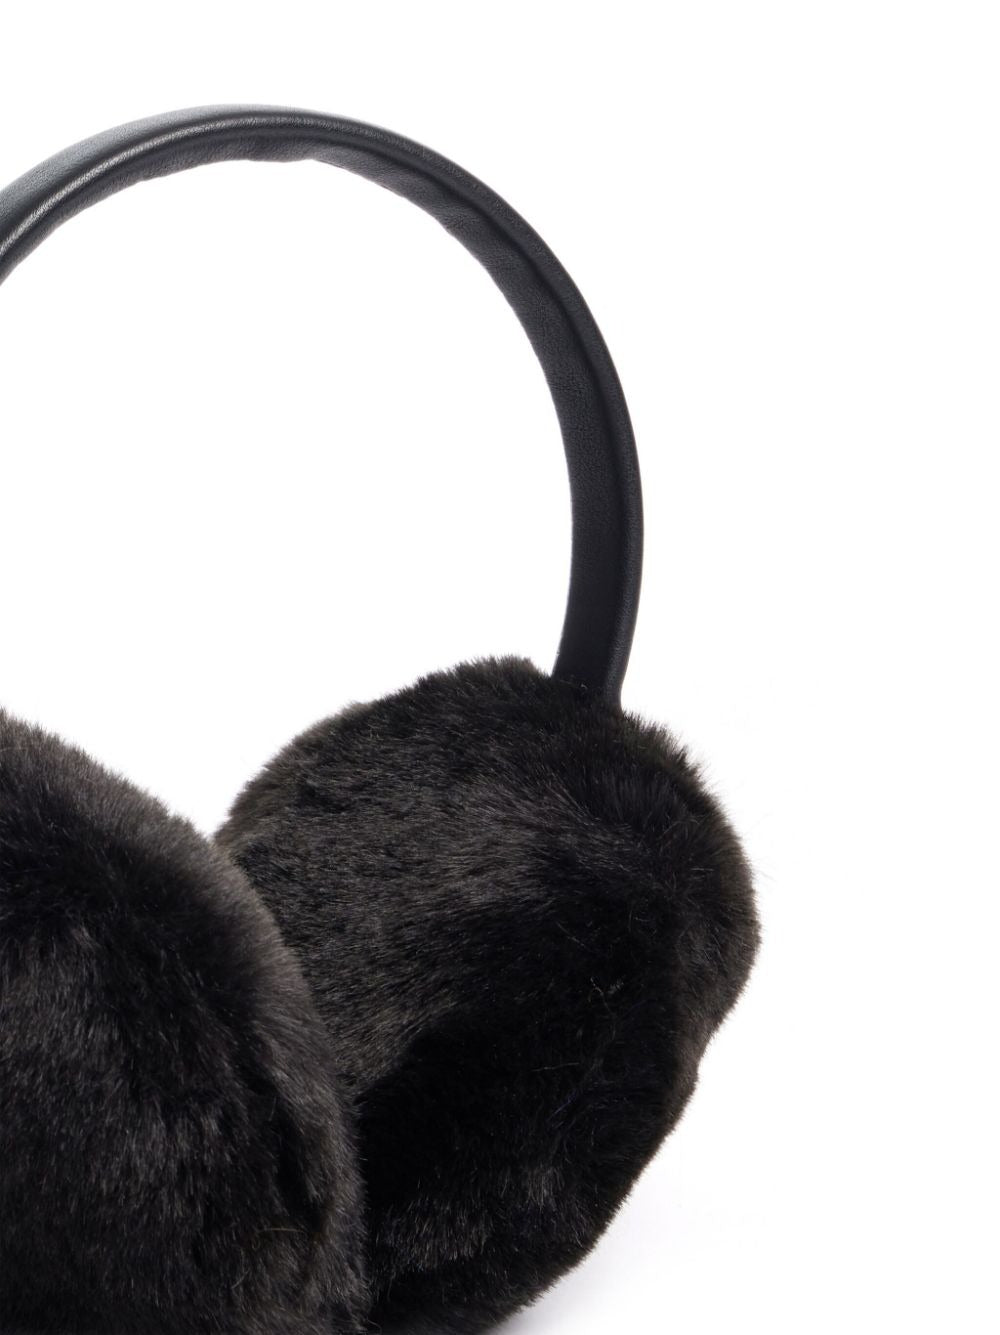 Apparis Esme Plant-Based Fur Earmuffs in Noir